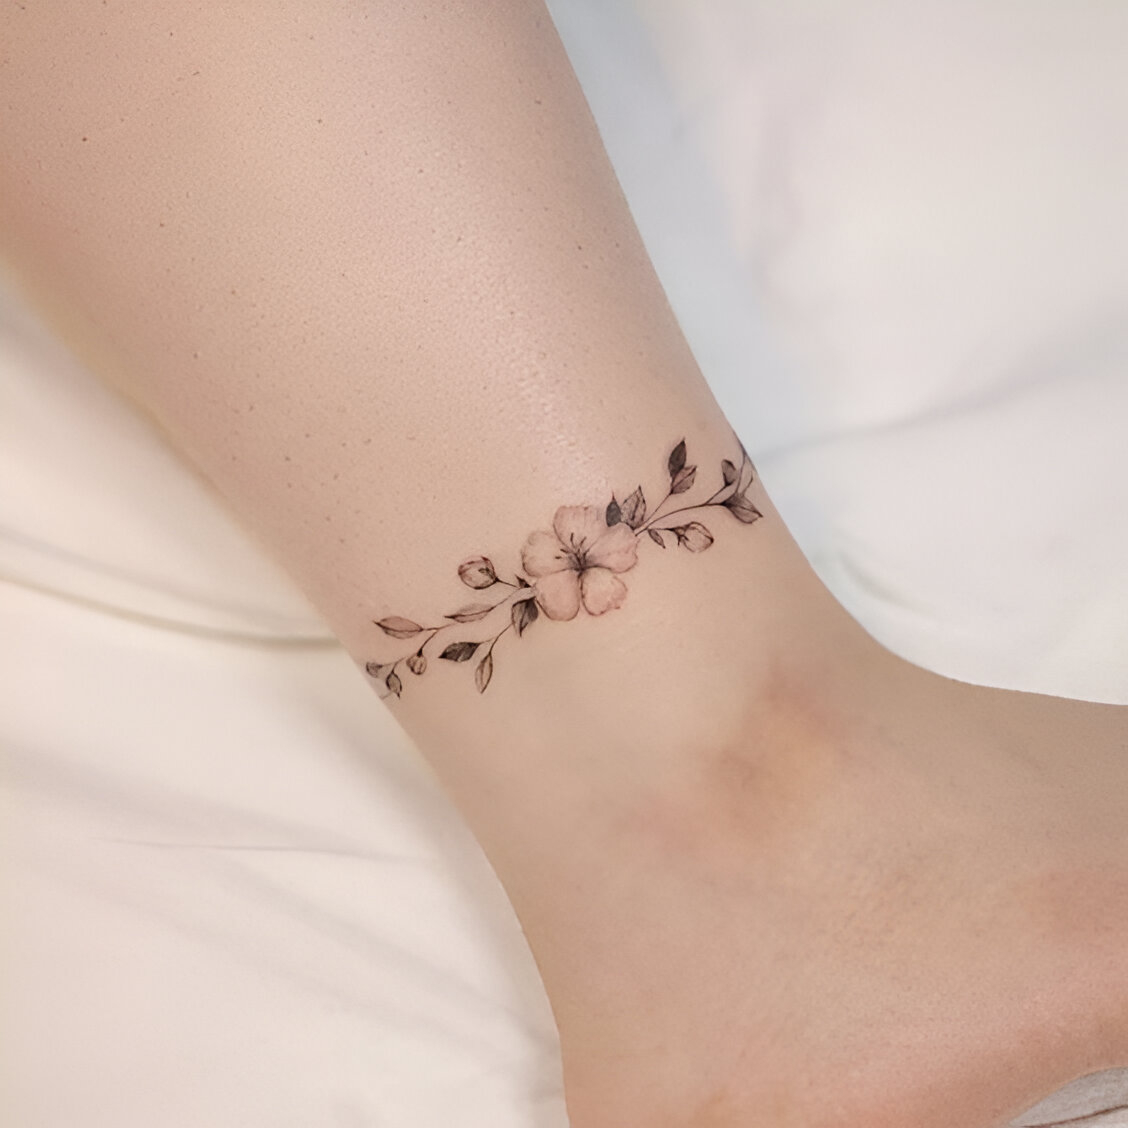 Charming Flower Ankle Bracelet Tattoo